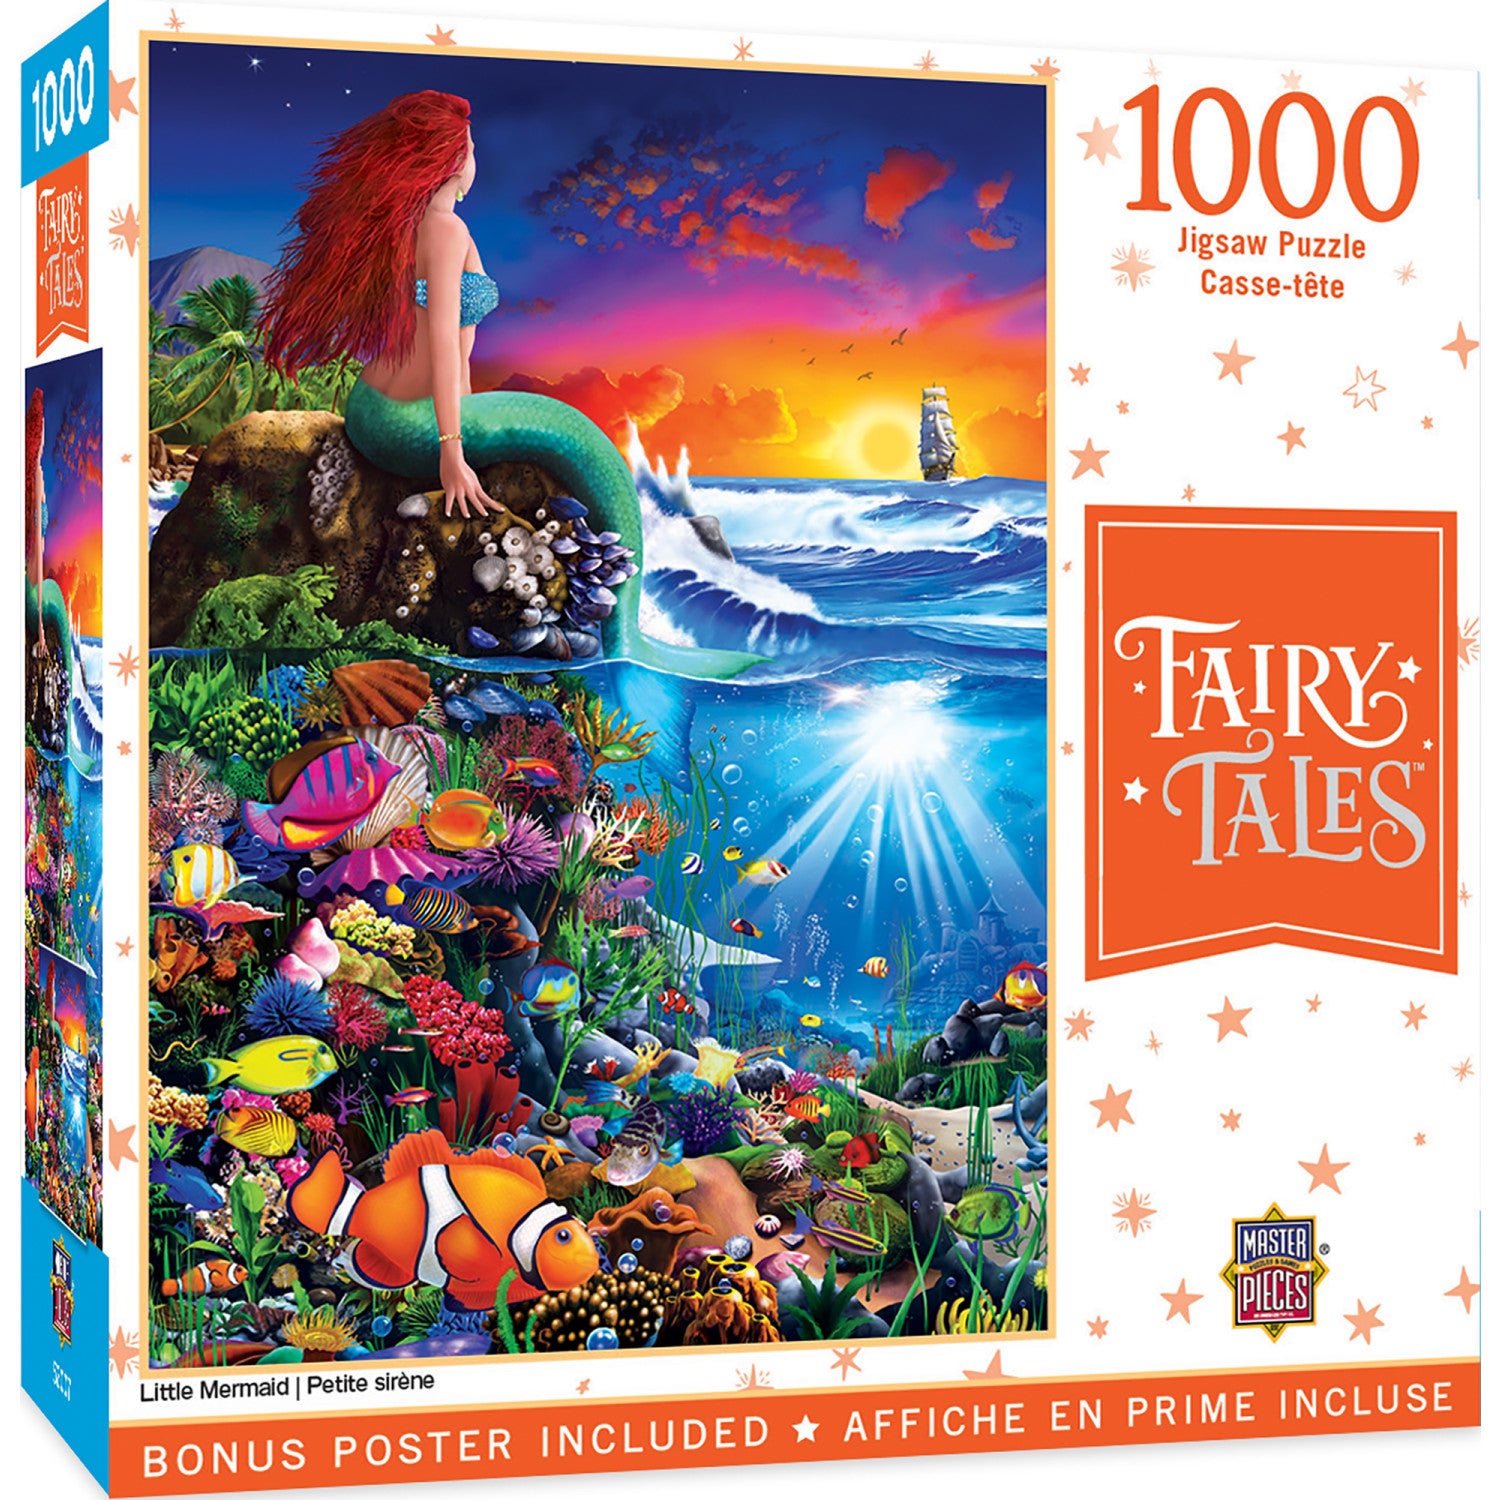 Classic Fairy Tales - Little Mermaid 1000 Piece Jigsaw Puzzle